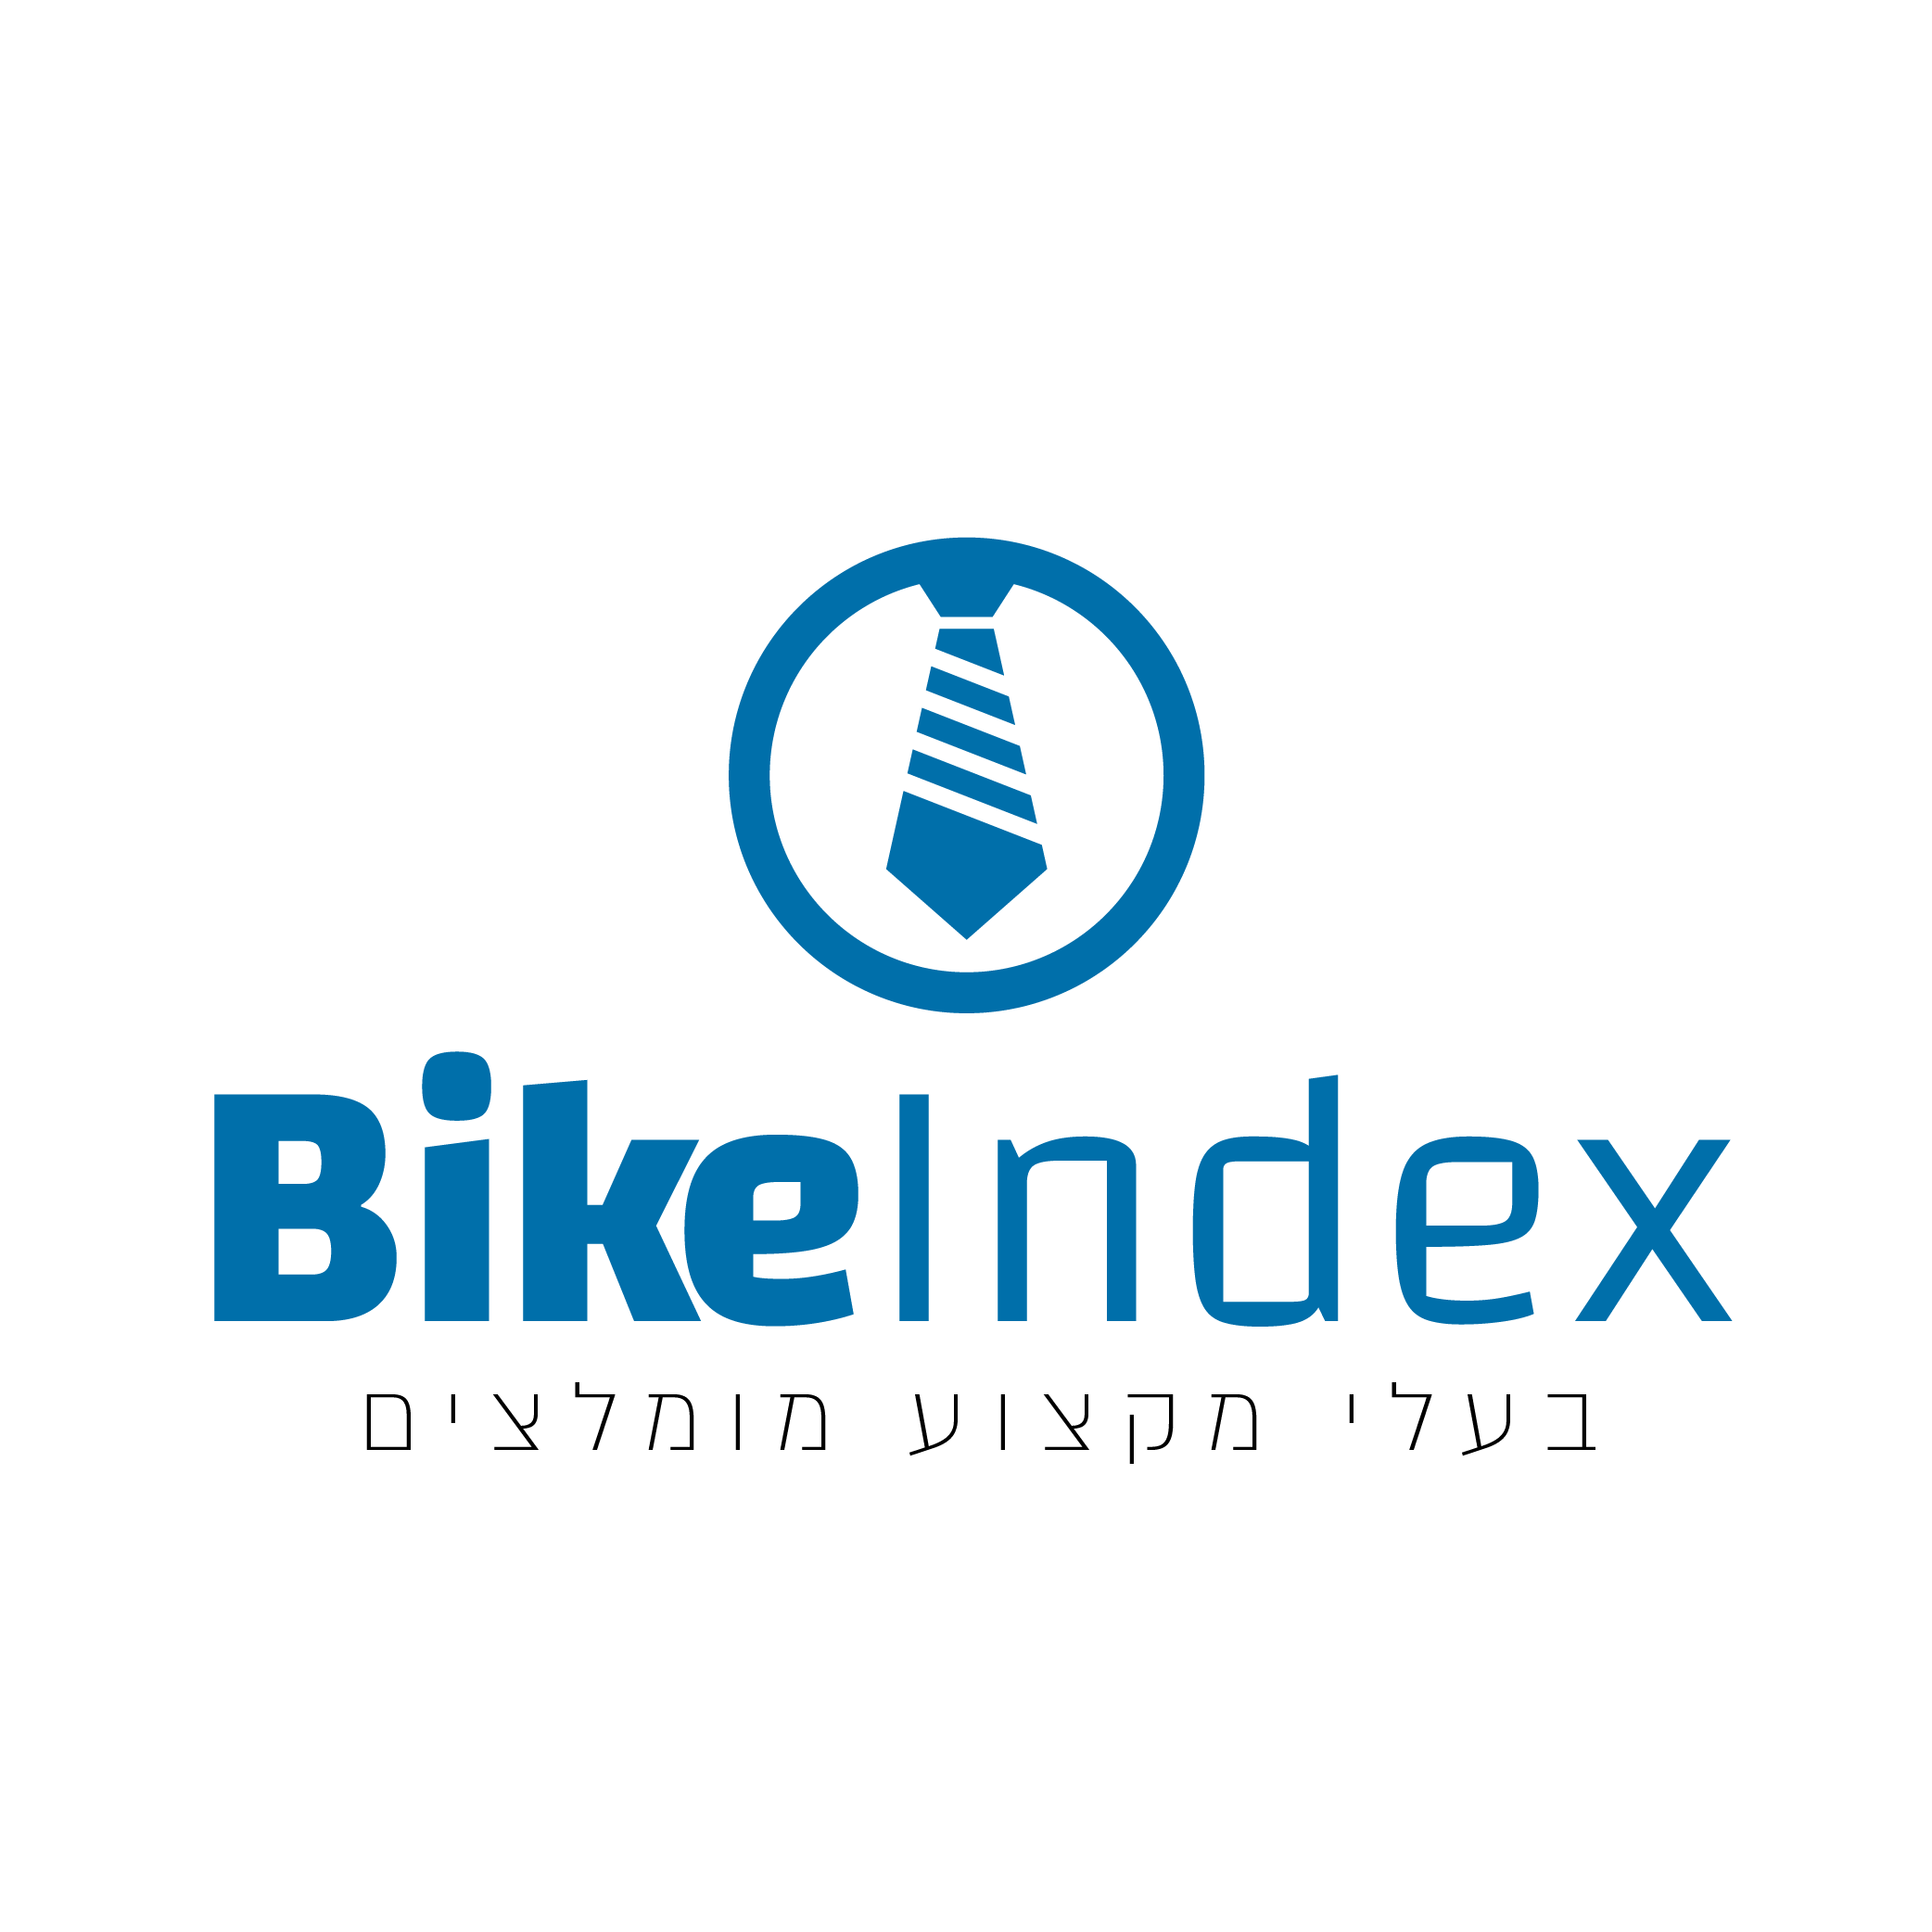 BikeIndex – אינדקס בעלי מקצוע